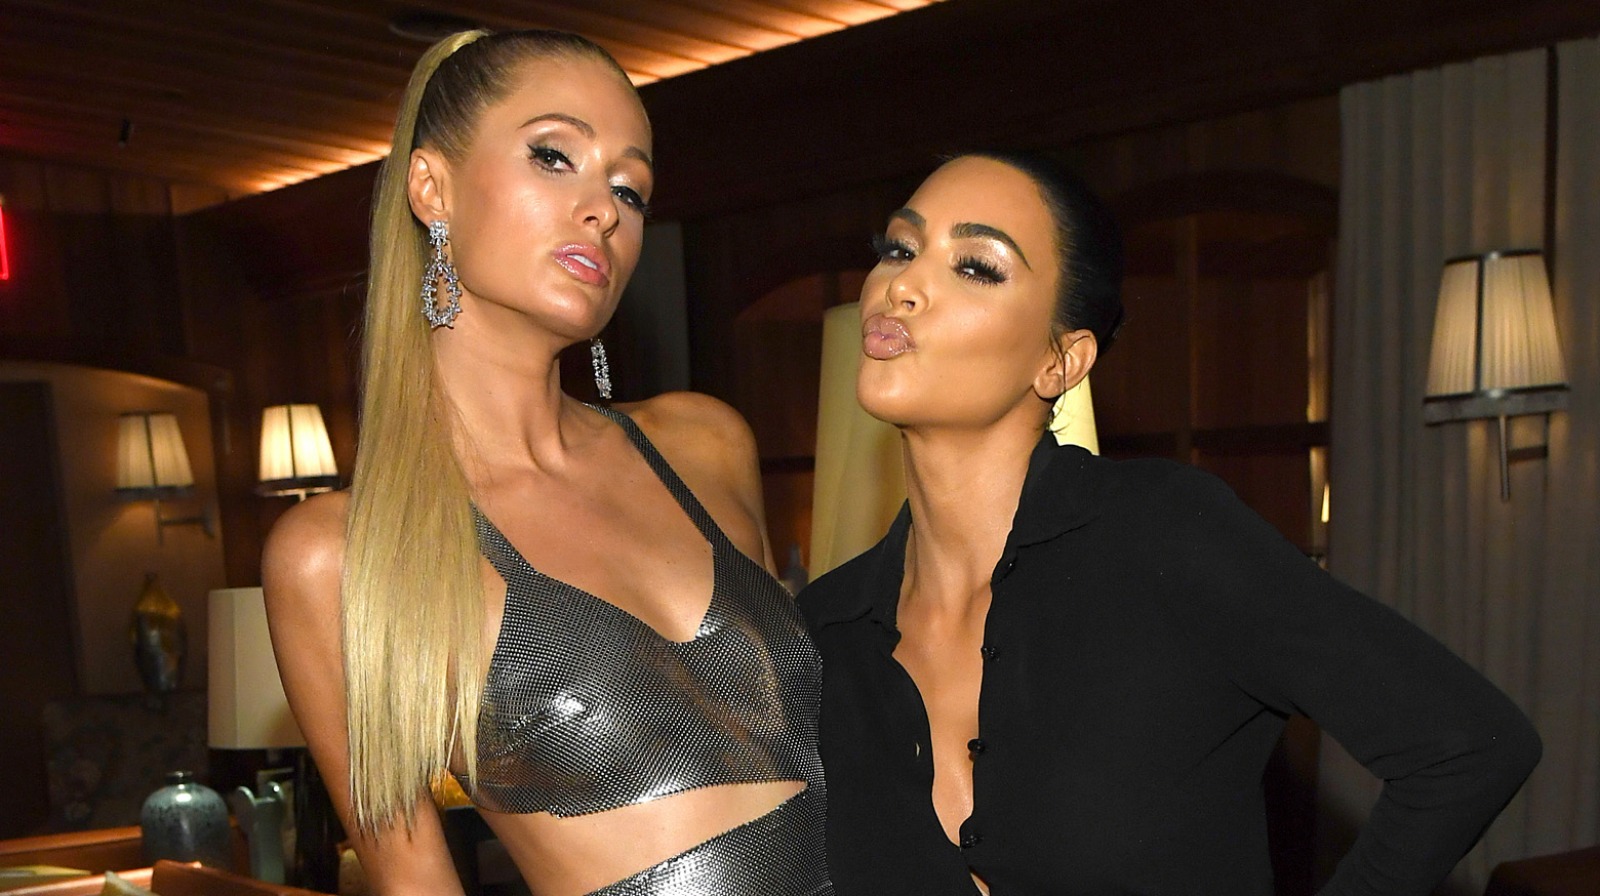 Kim Kardashian living in Paris Hilton's early 2000s shadow: a